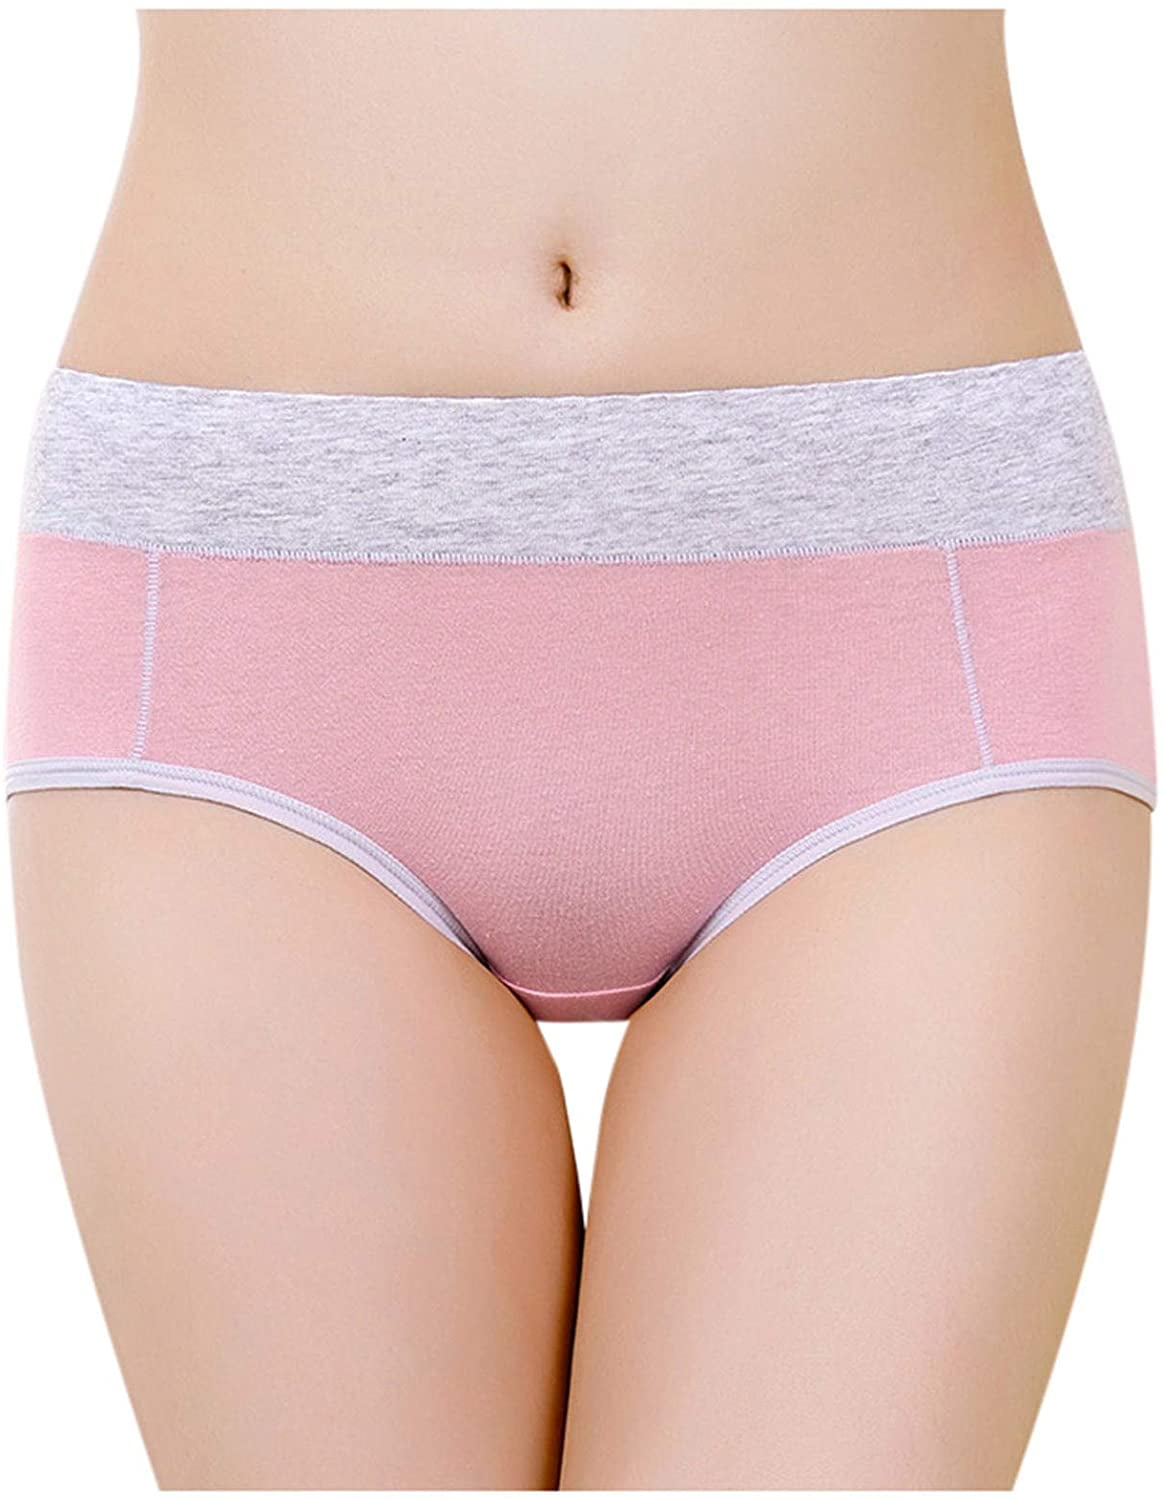 Maqroz 5PC Stretch Cotton Underwear for Women,Solid Color Patchwork Briefs Panties Underwear Underpants Comfty Briefs 